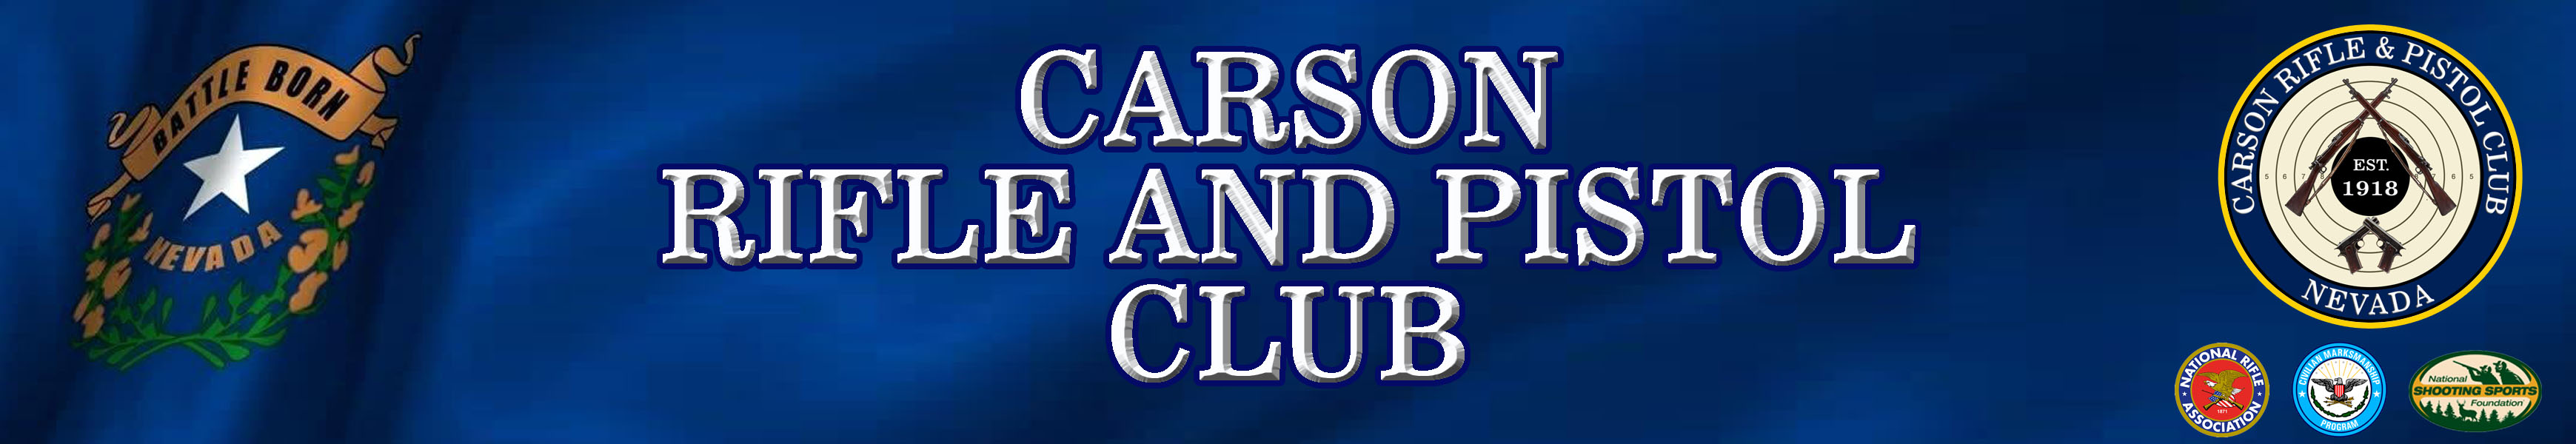 CARSON RIFLE AND PISTOL CLUB